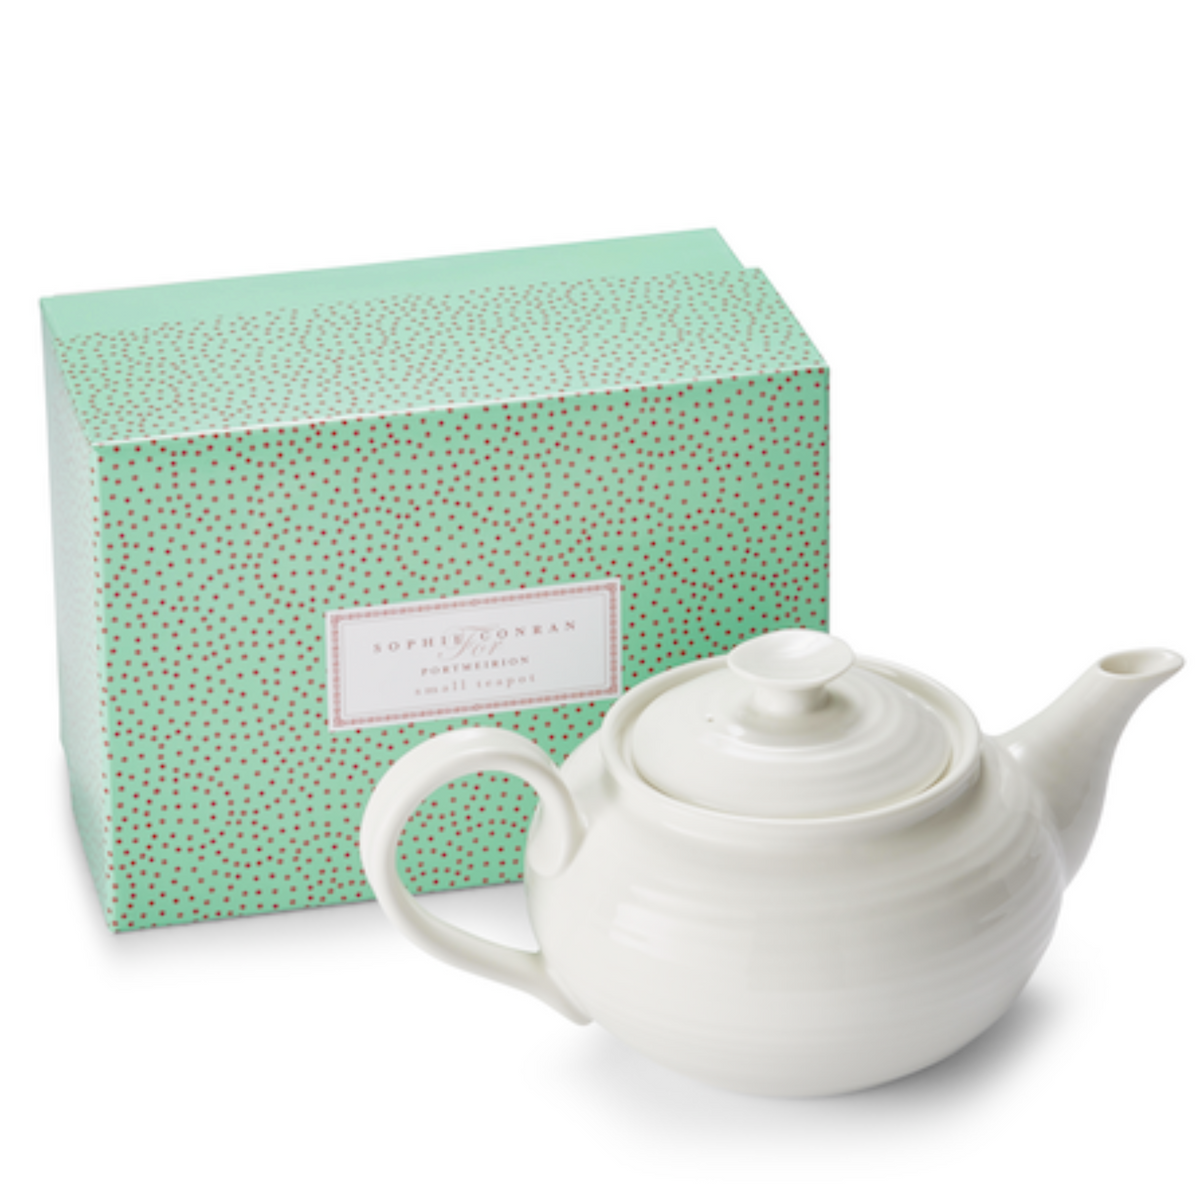 Sophie Conran White Teapot